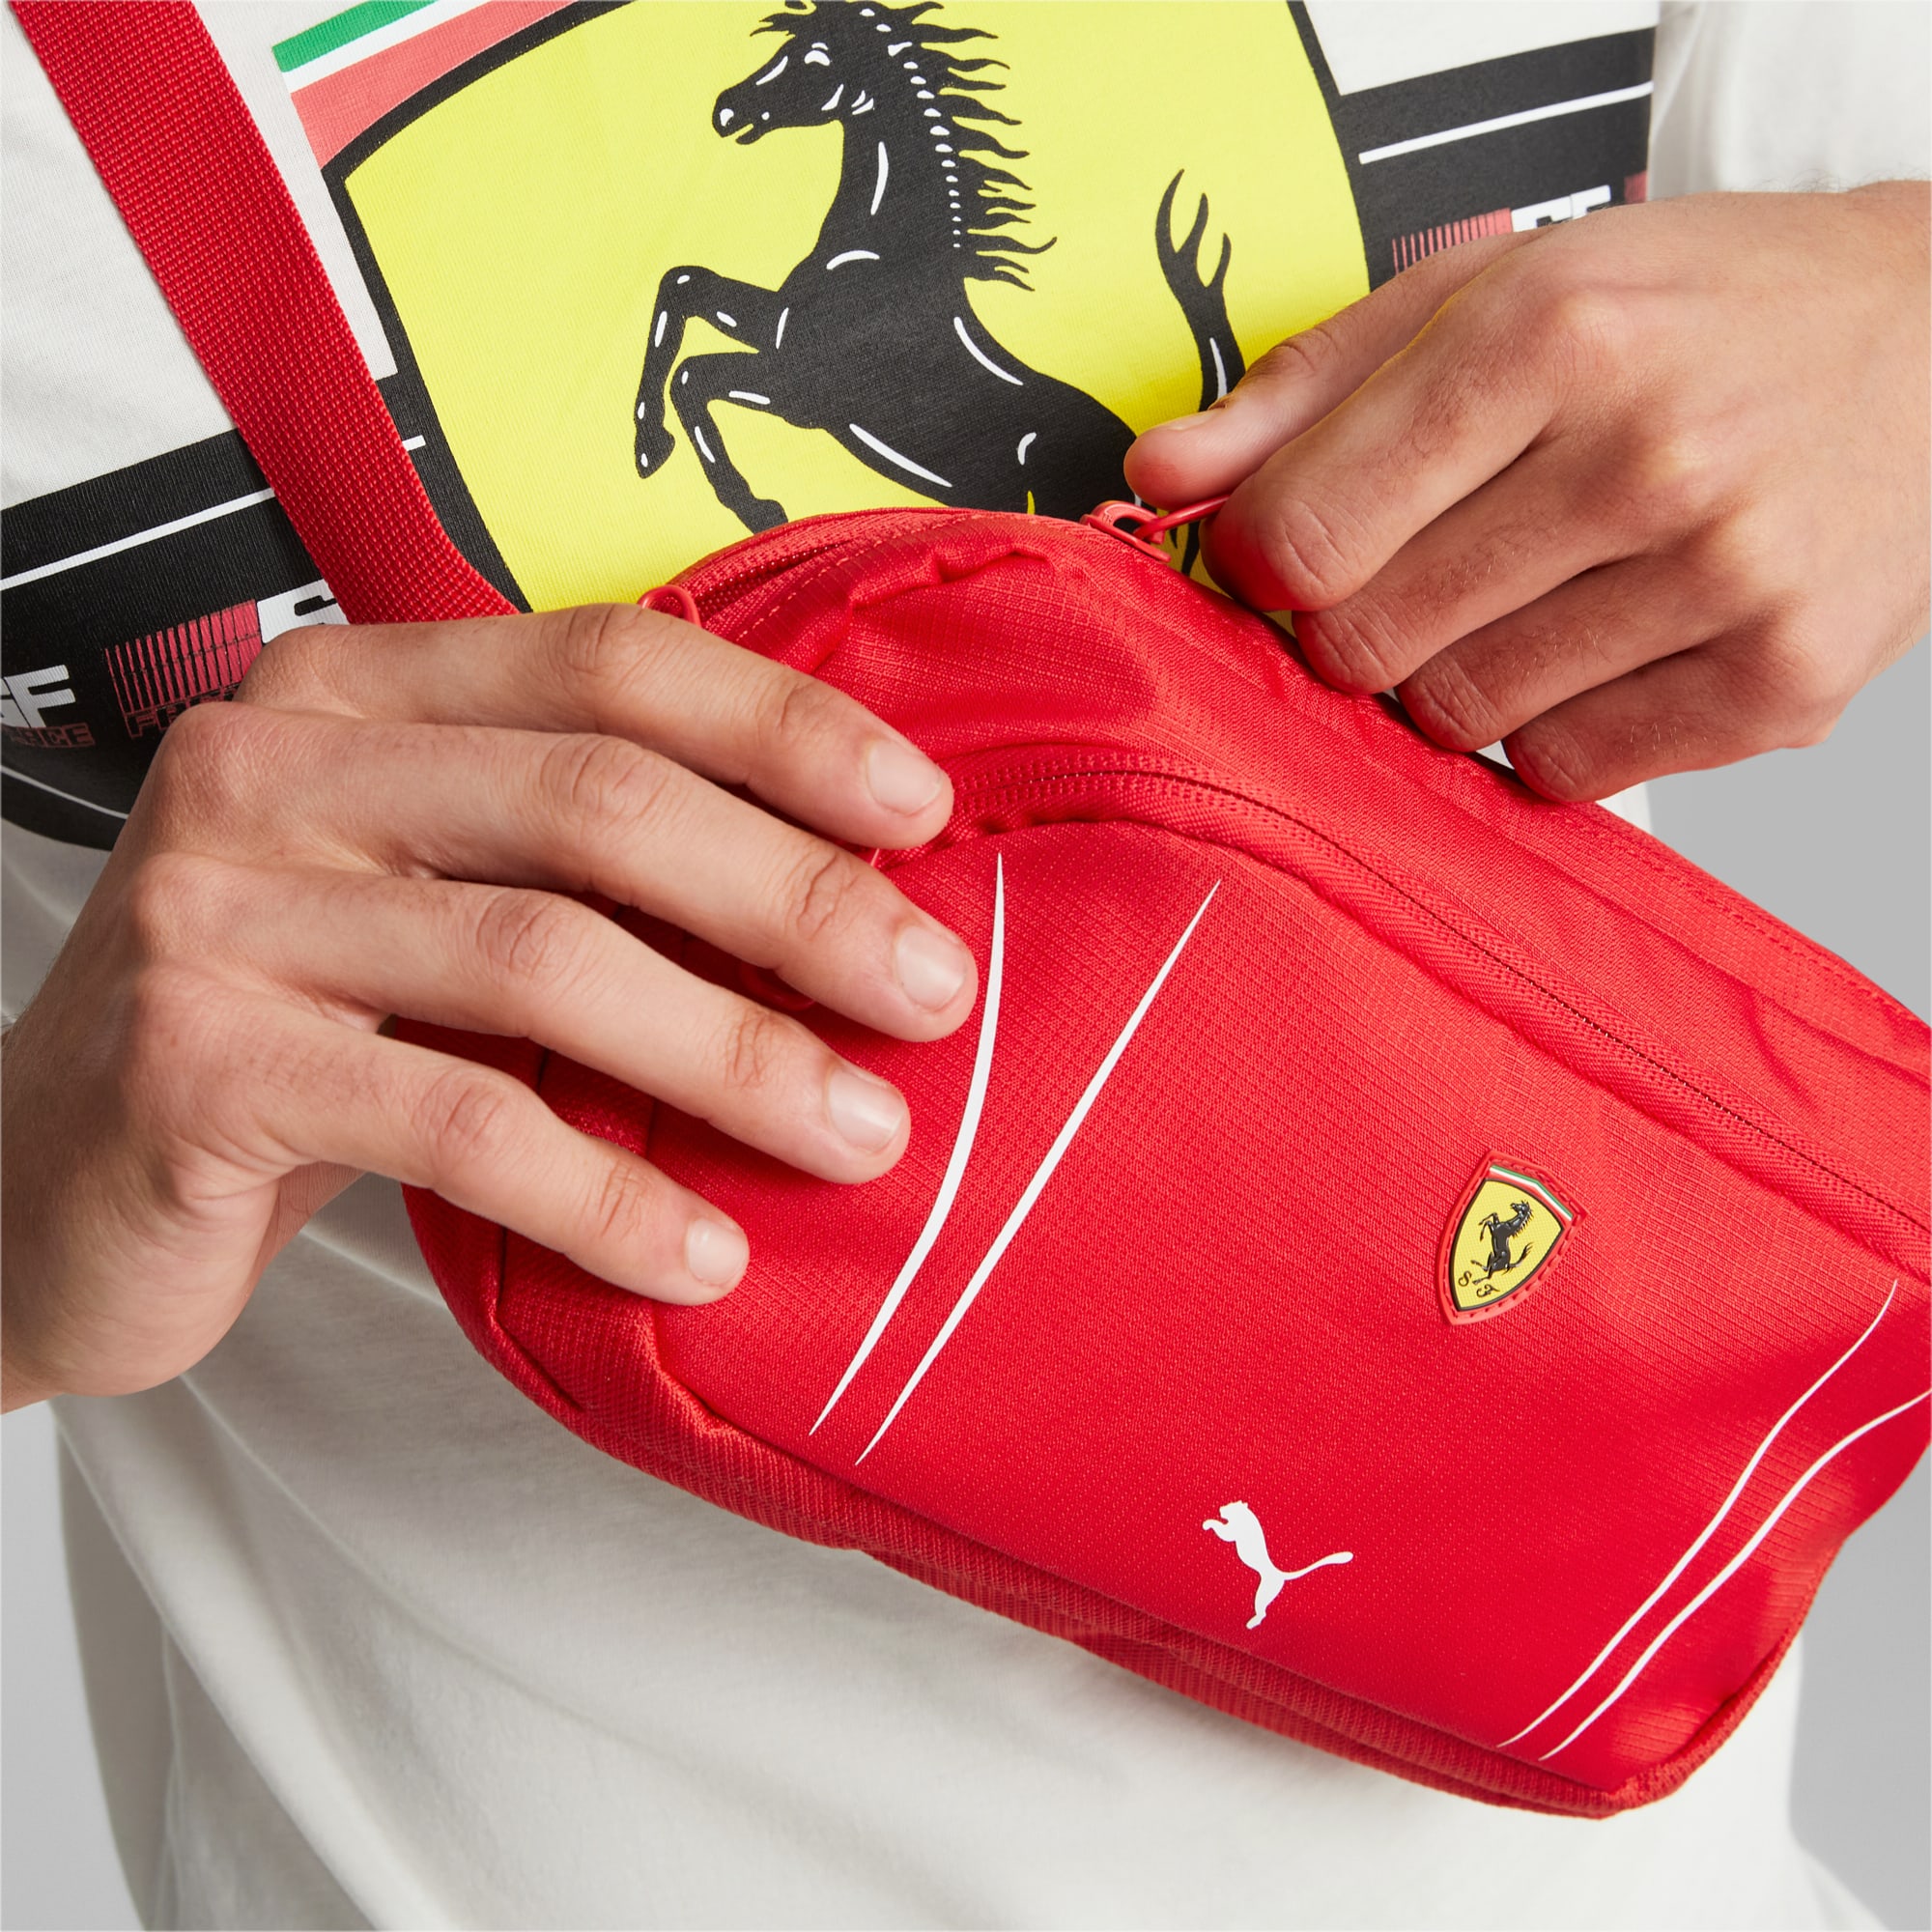 Women's PUMA Scuderia Ferrari Sptwr Race Waist Bag, Red, Accessories